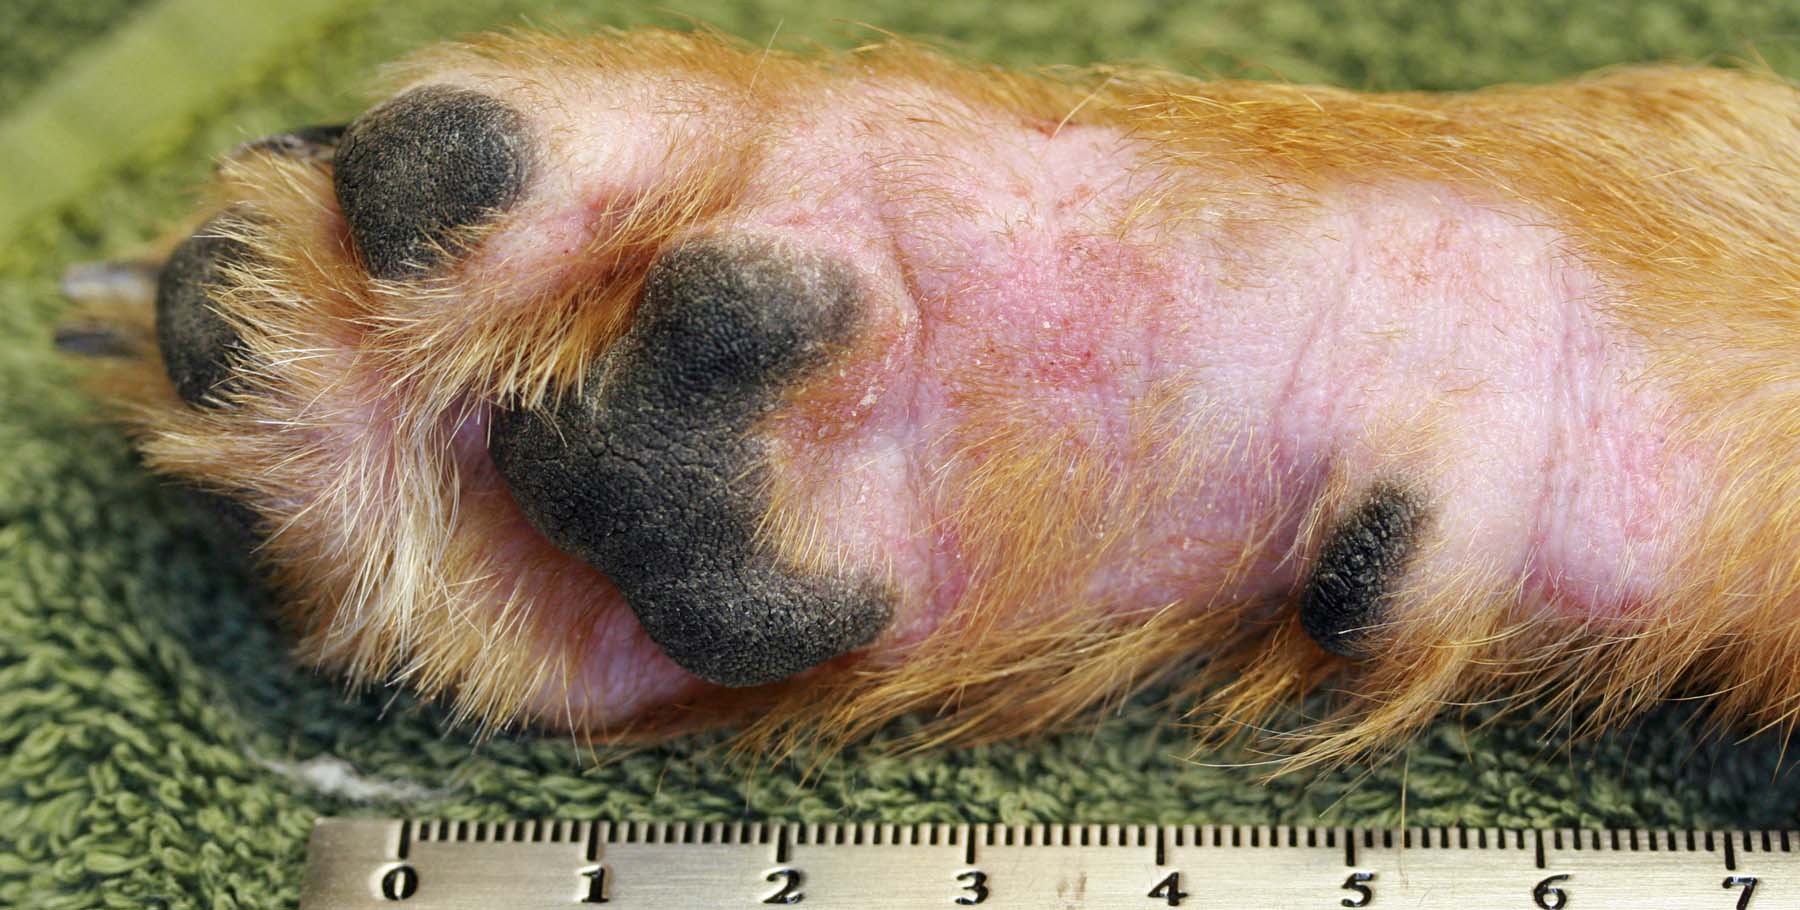 how do you treat dog dermatitis